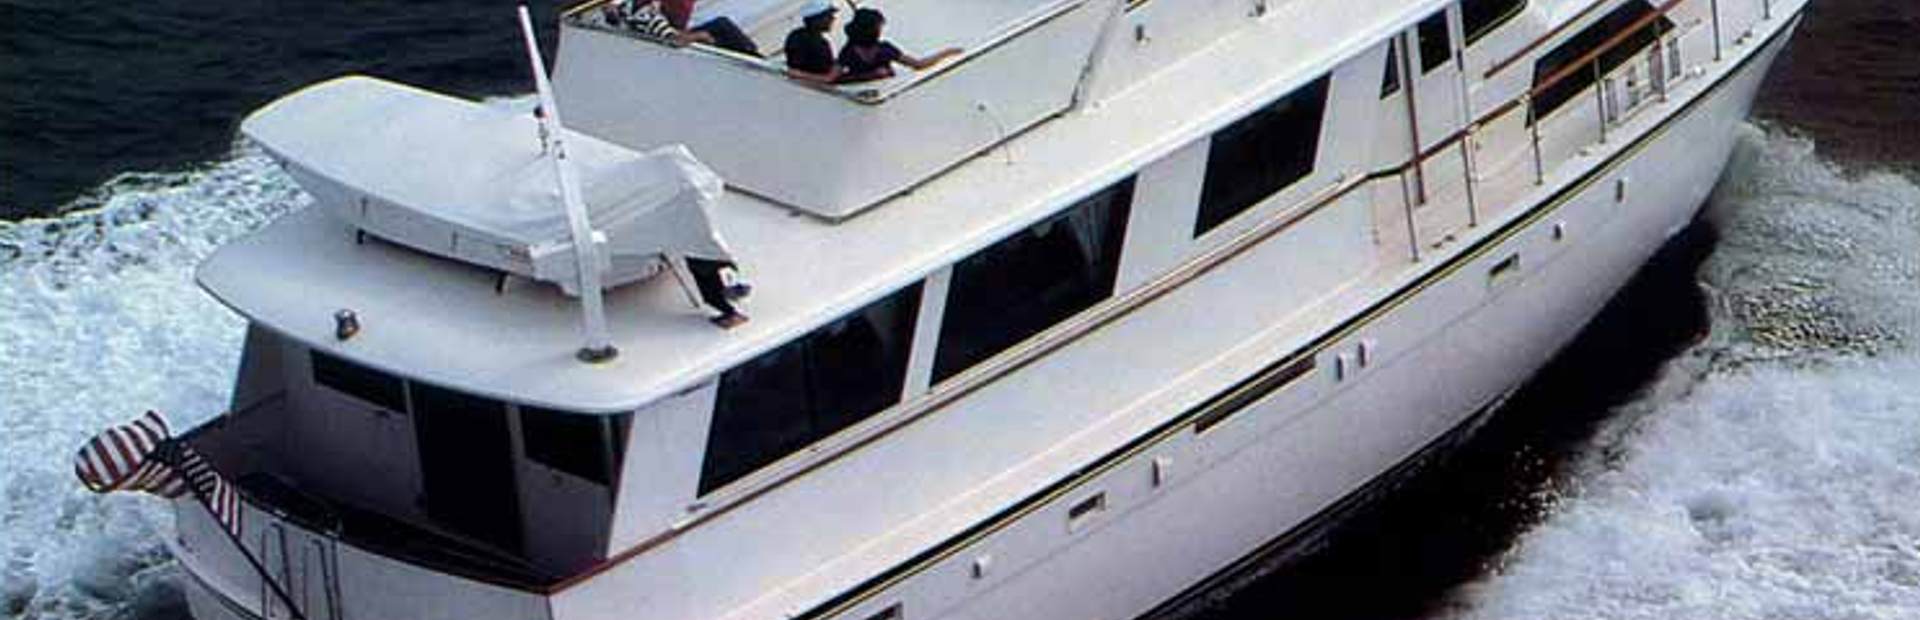 Hatteras 61 Motoryacht Yacht